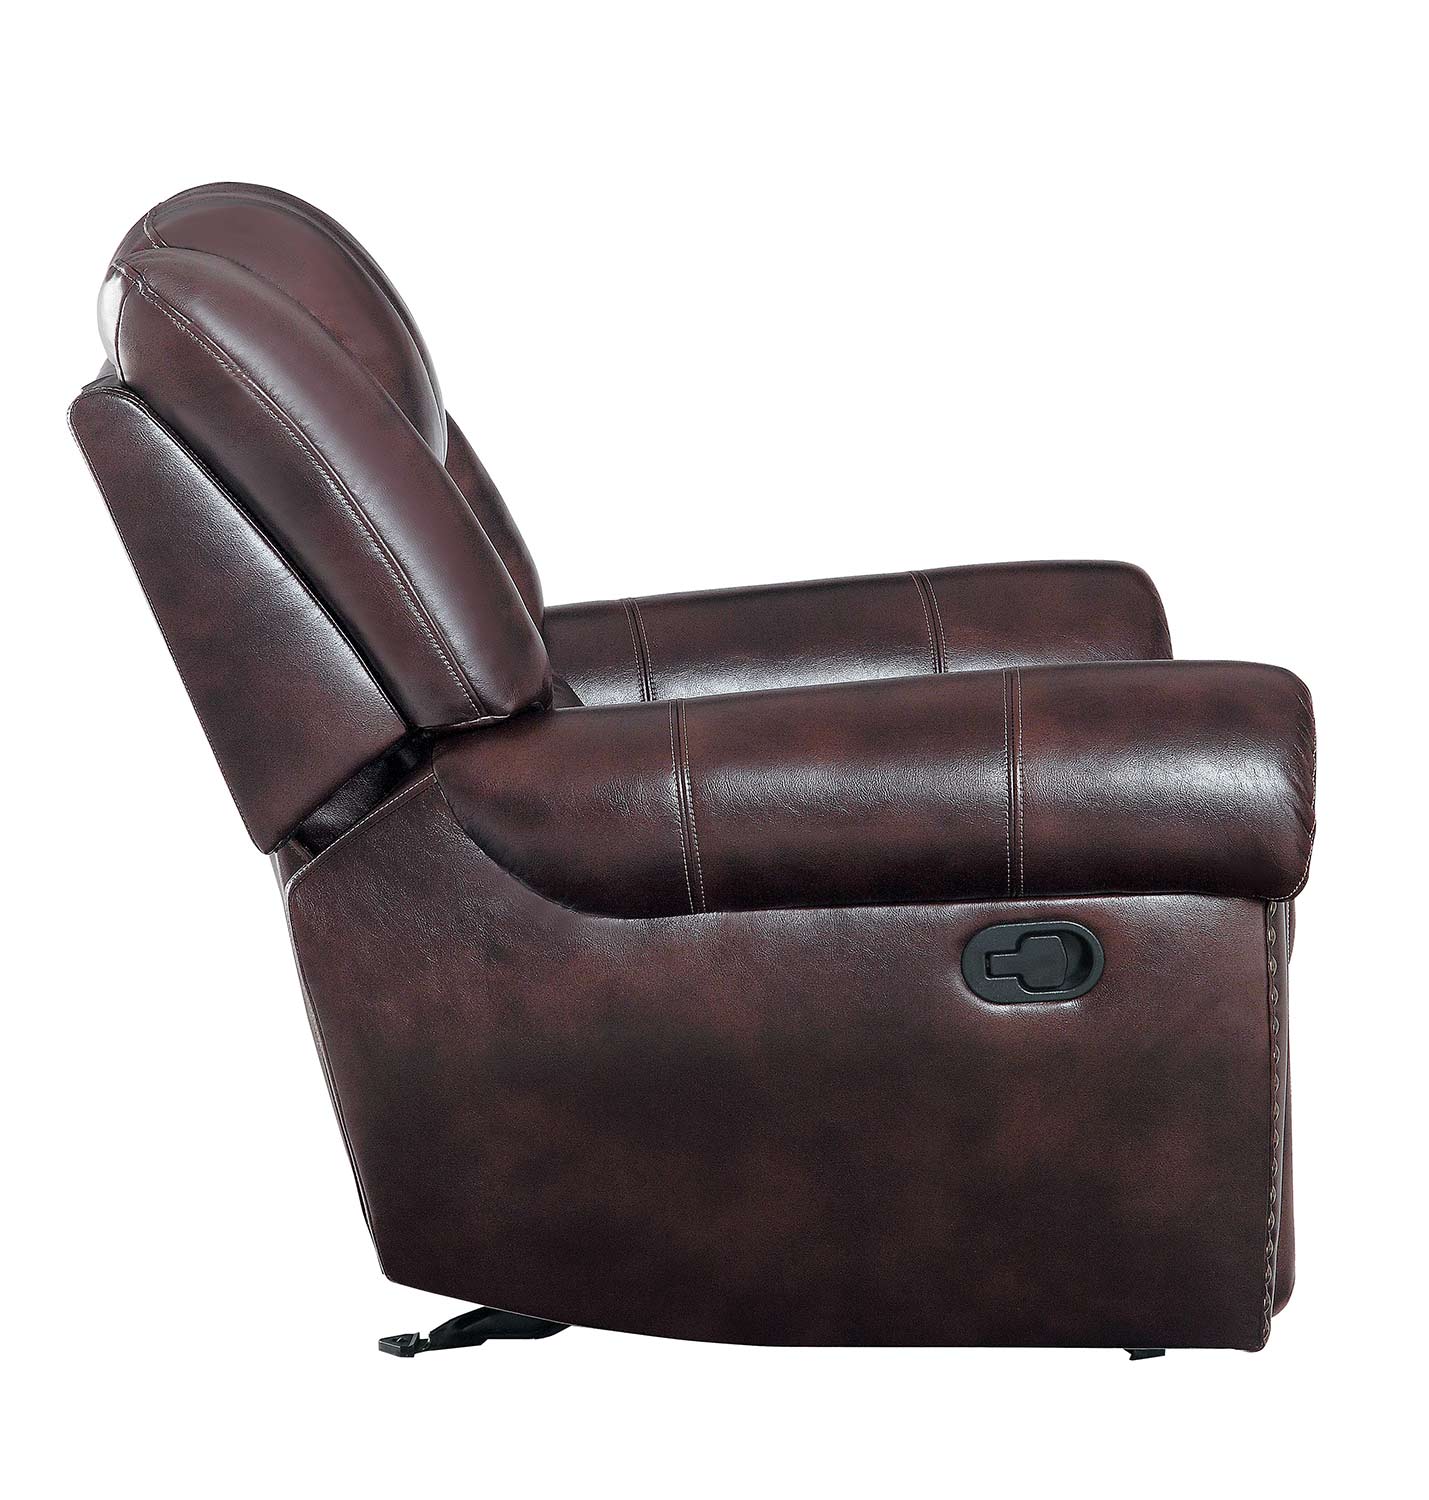 Homelegance Center Hill Glider Reclining Chair - Dark Brown